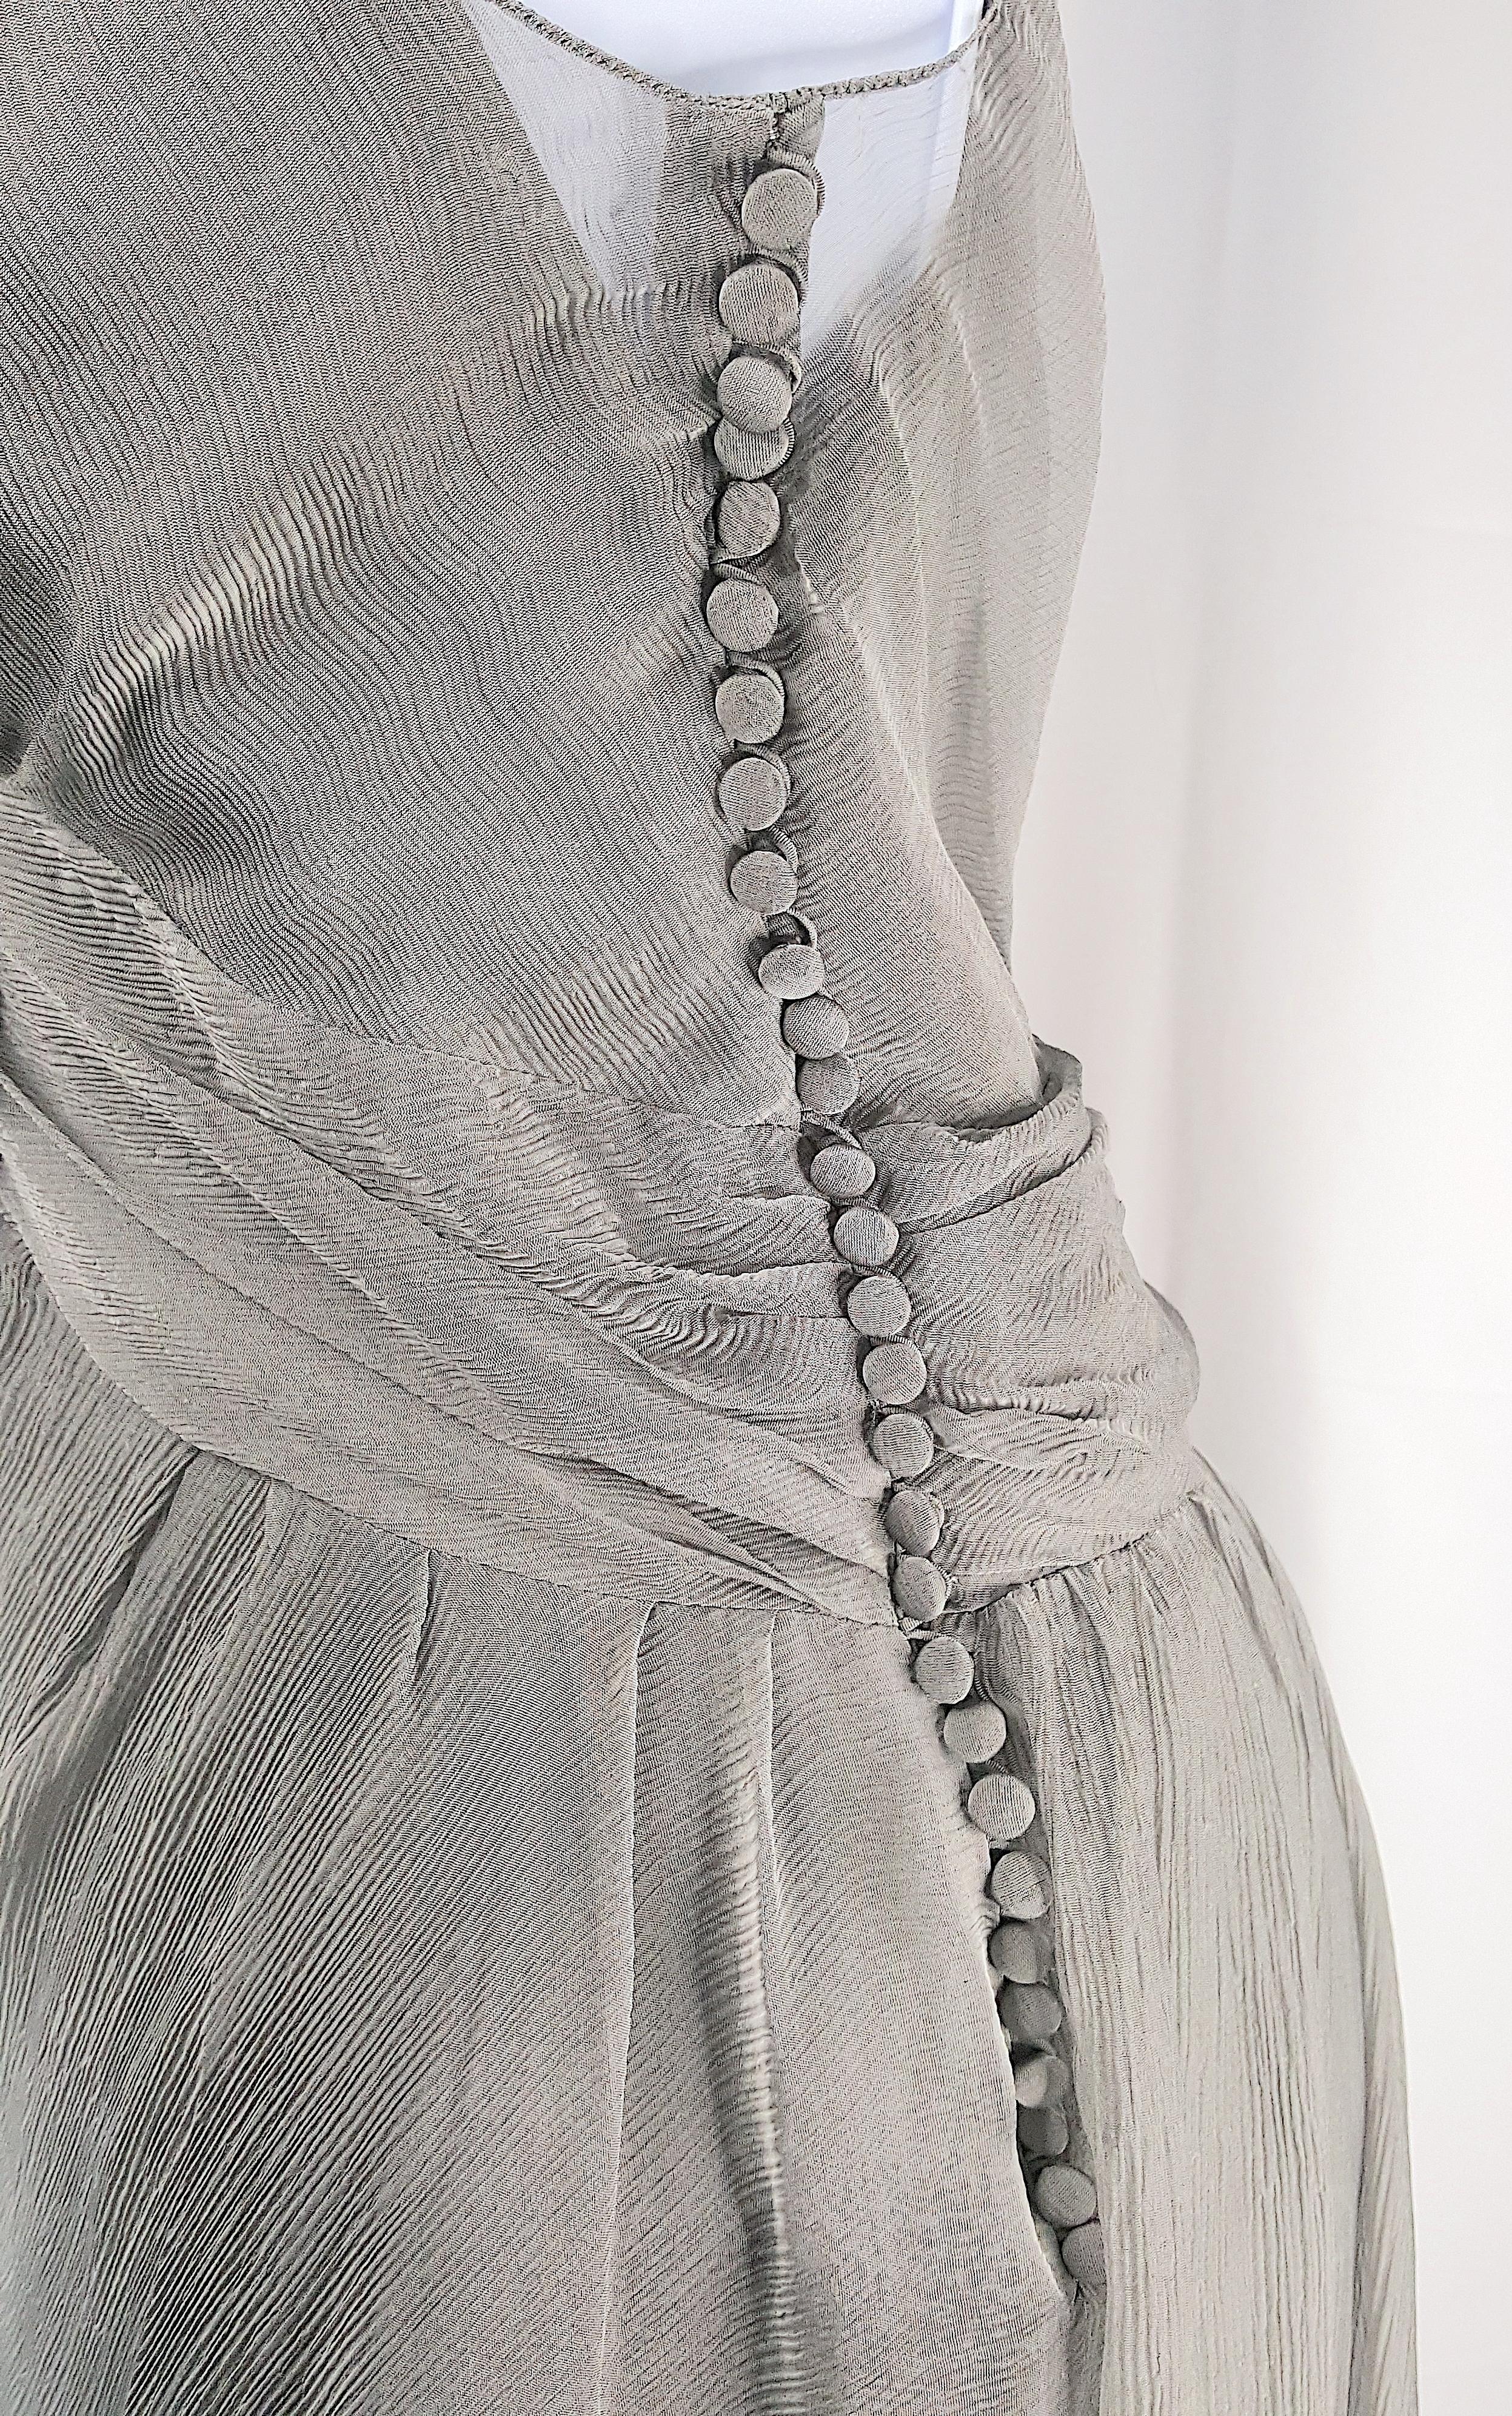 JohnGalliano 1stYearChristianDior - Robe de ballerine en géorgette de soie superposée coupée en biais en vente 4